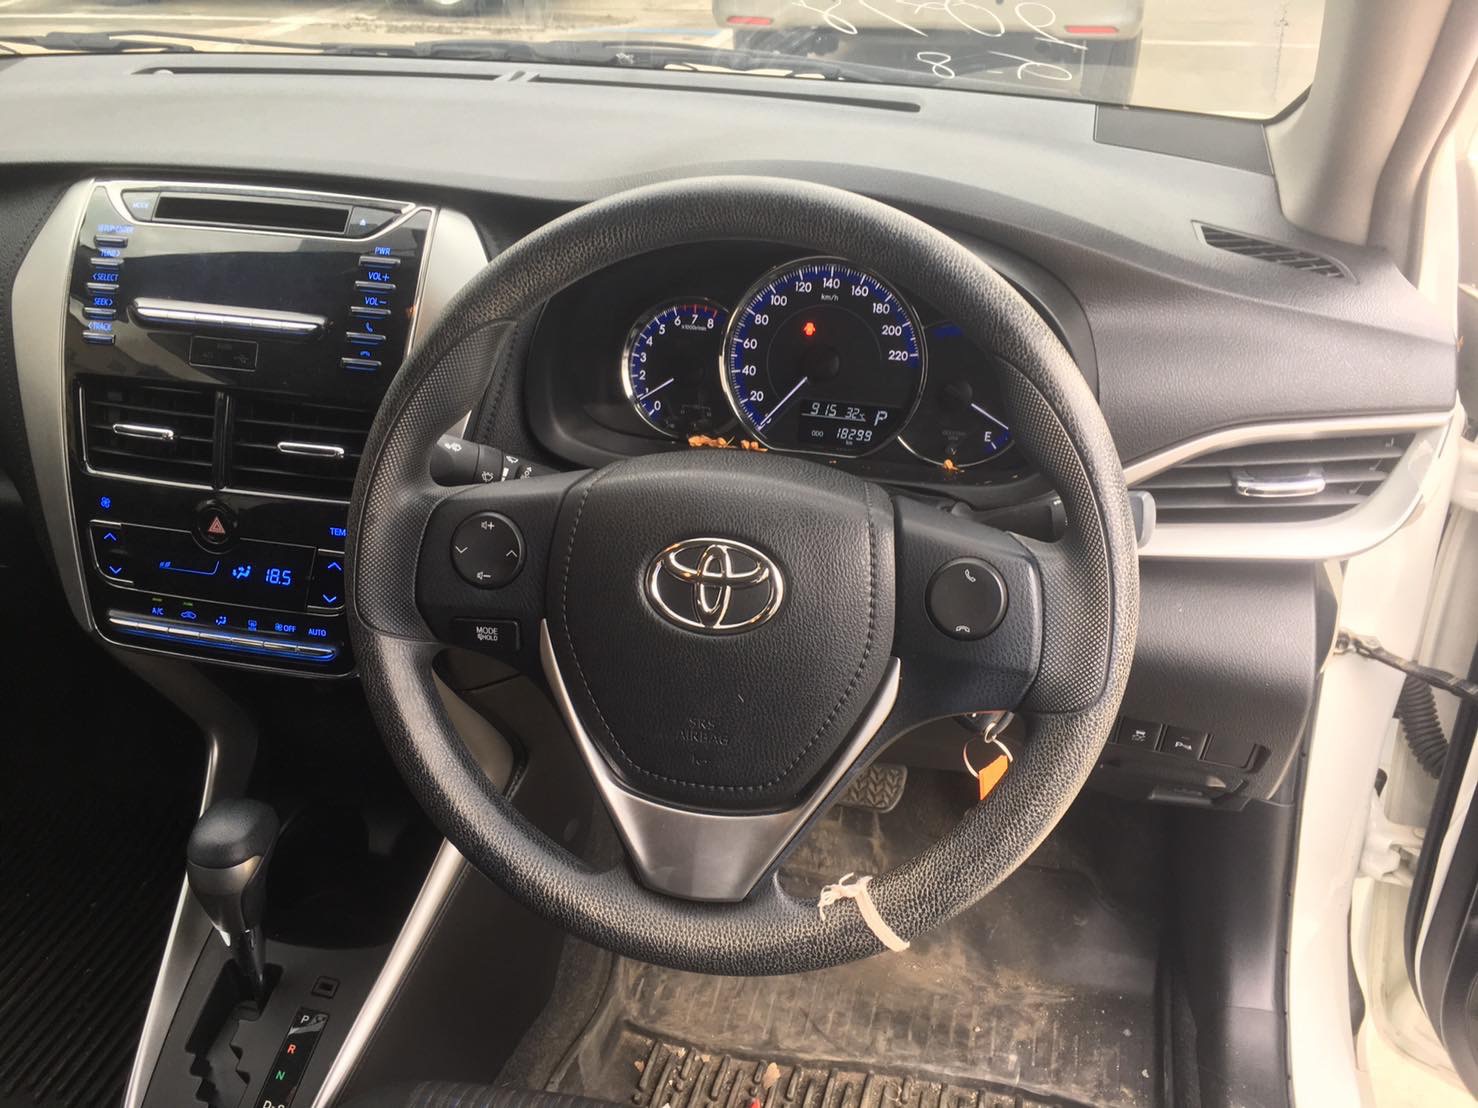 Toyota Yaris Ativ ปี 2018 สีขาว